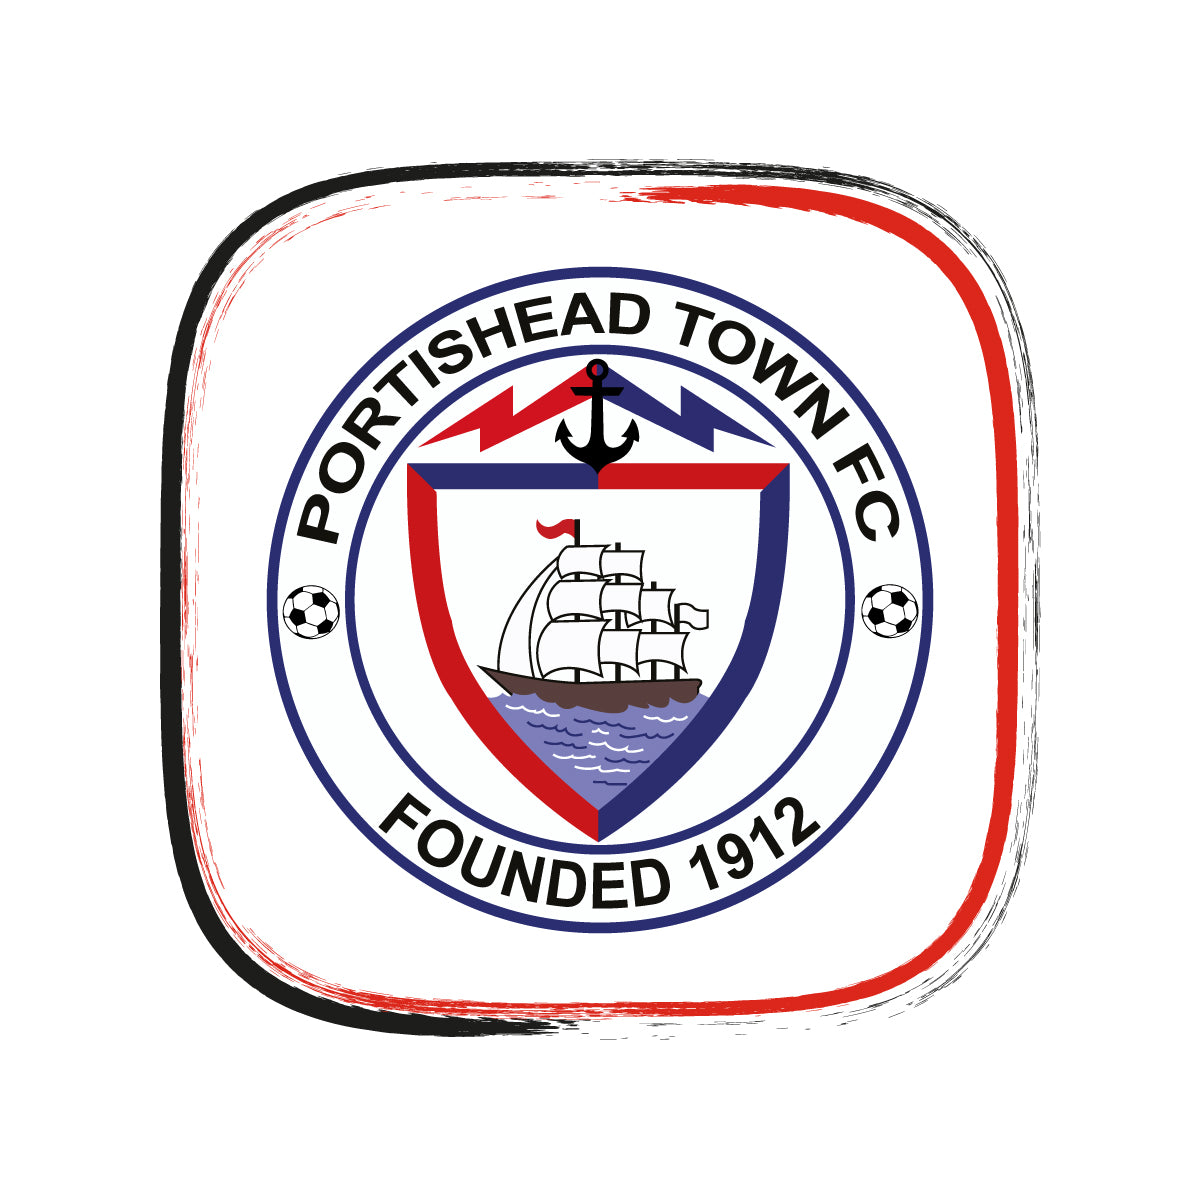 Portishead Town FC